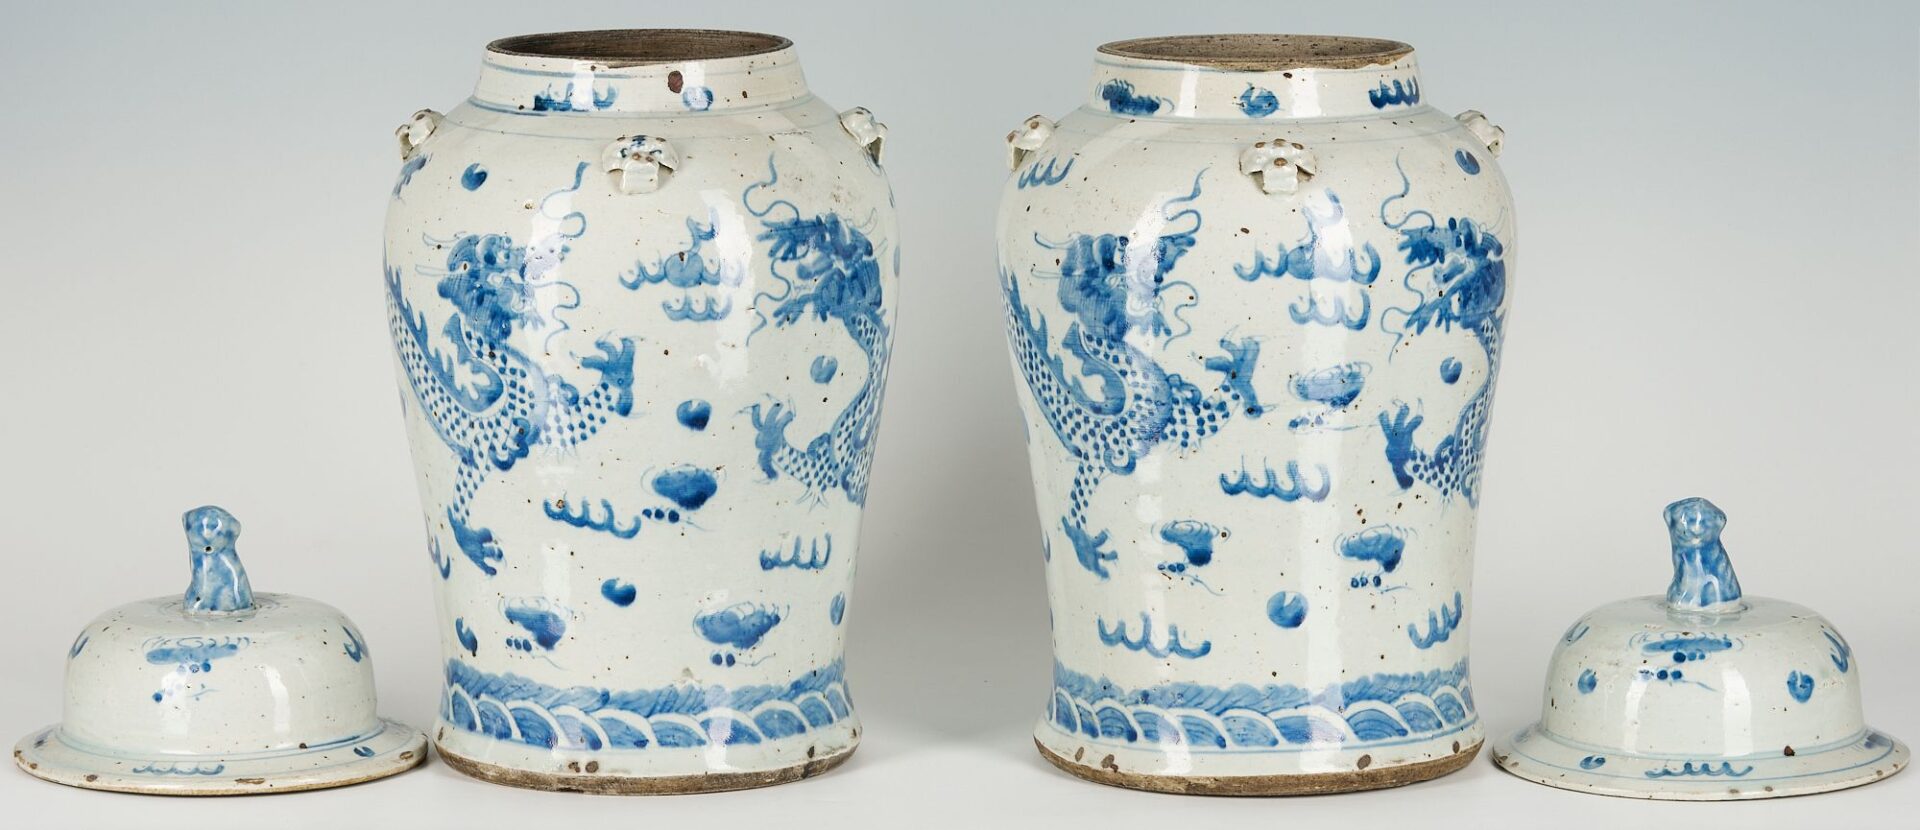 Lot 882: Large Pair of Chinese Blue & White Ginger Jars, Dragon Designs